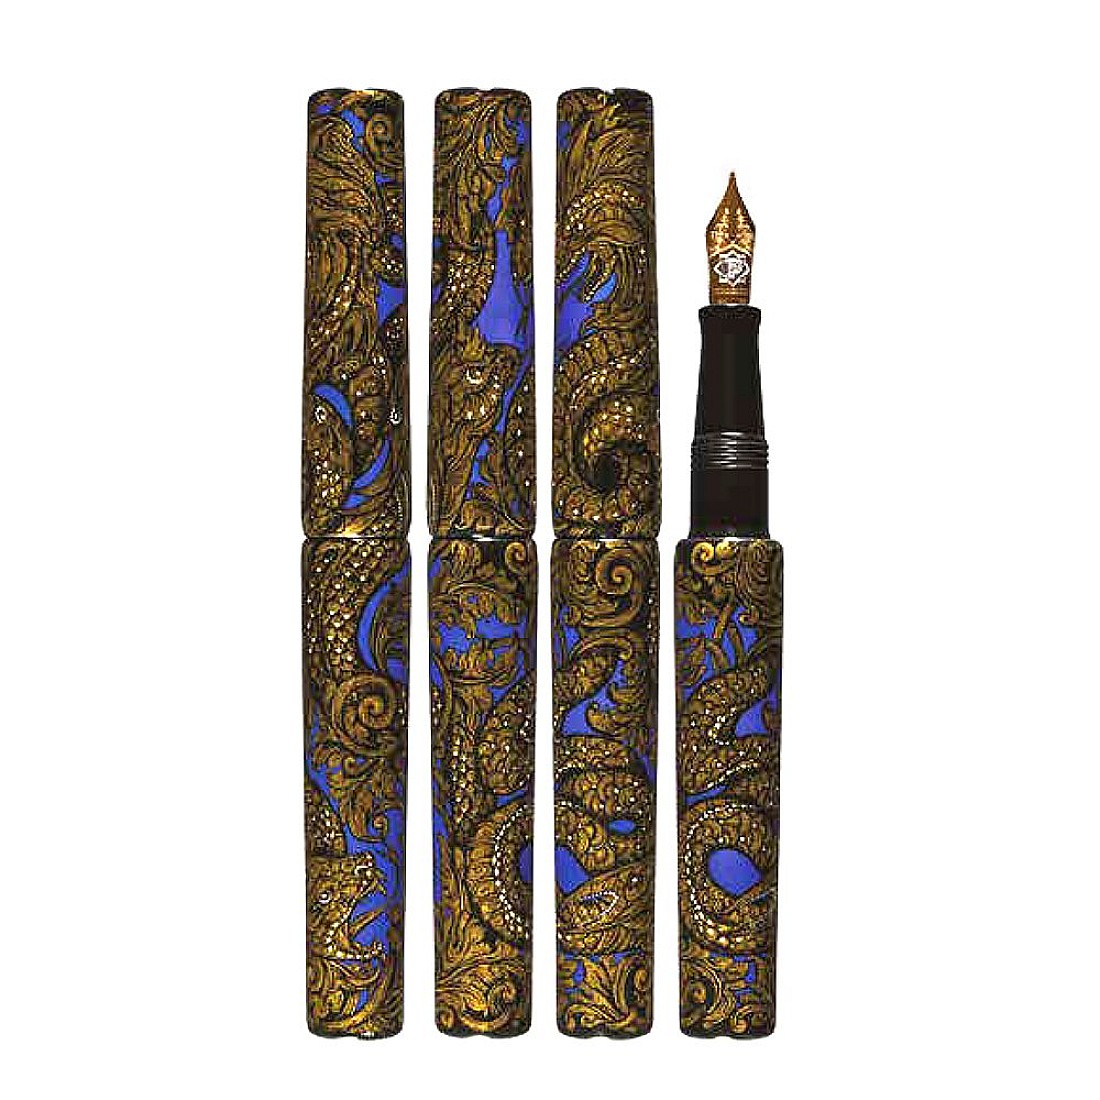 Phoenix Lacquer Art Ornaments Golden Dragons Fountain pen